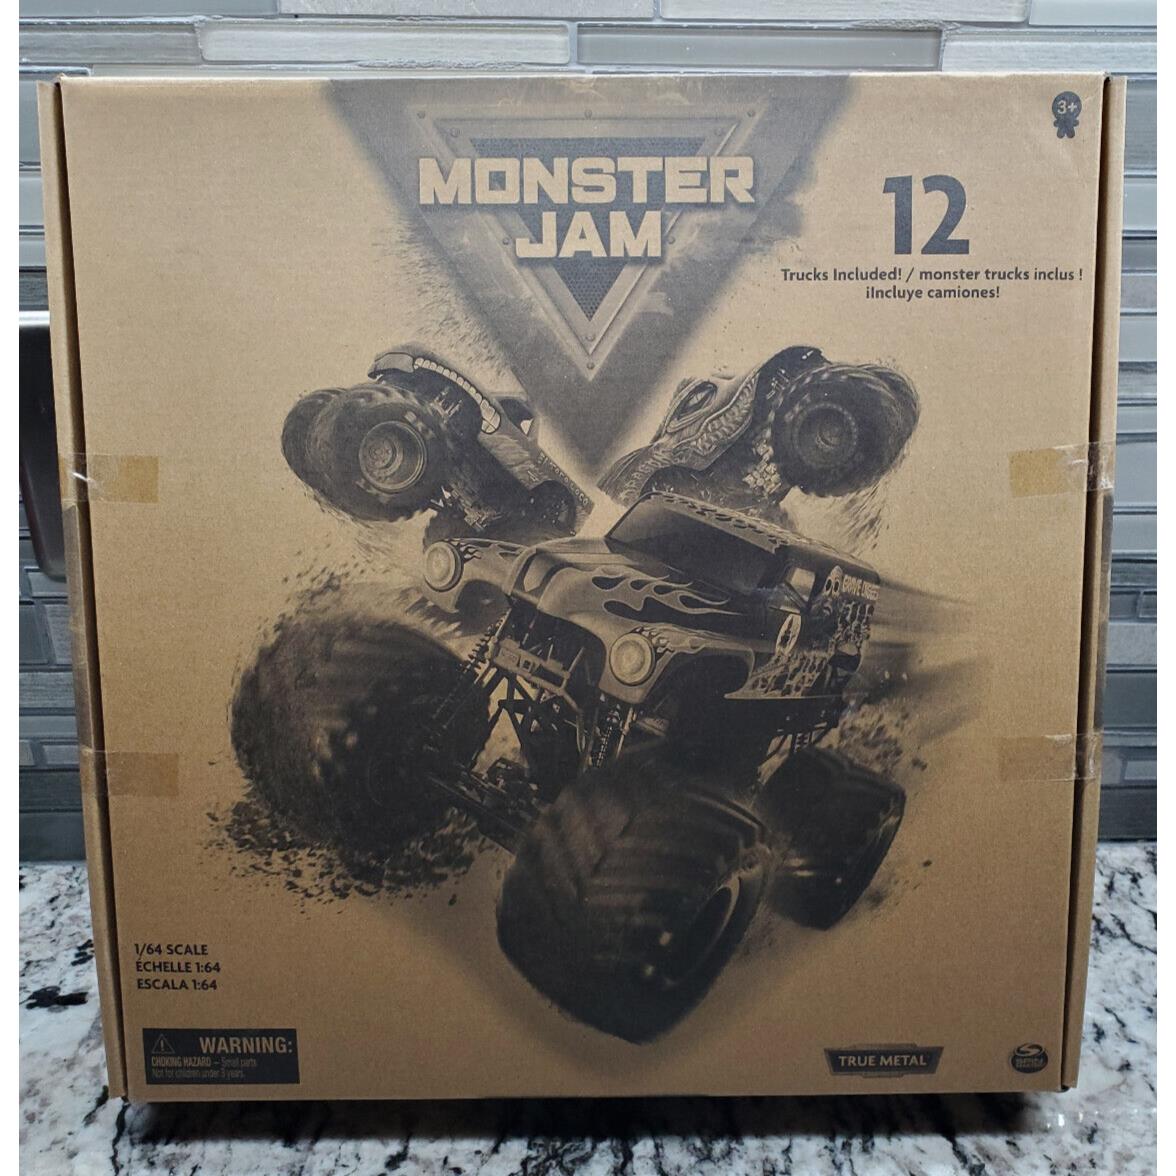 Monster Jam Exclusive Monster Trucks True Metal Spin Master 12 Pack 1:64 Scale